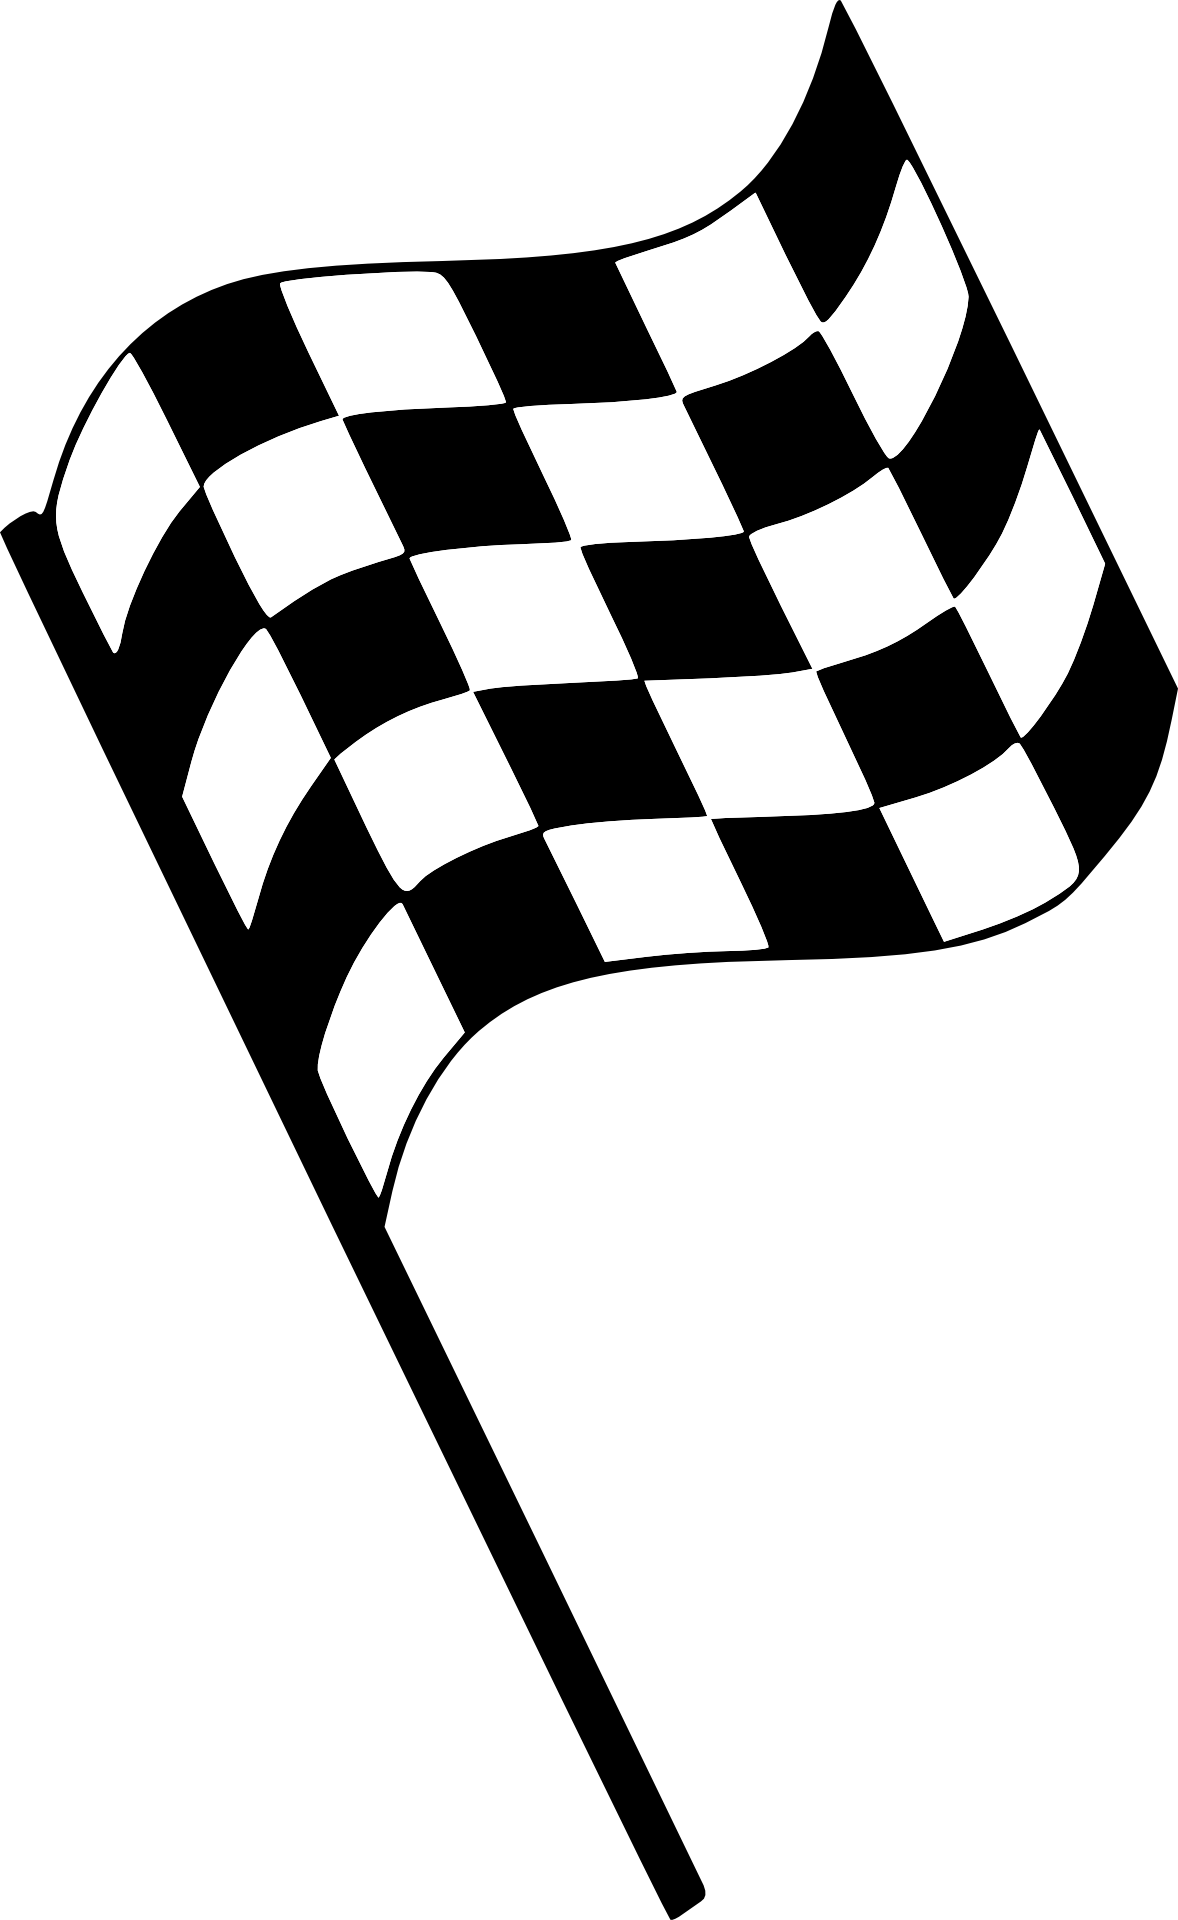 Motorsport Styling - Finish Line Flag (1178x1920)